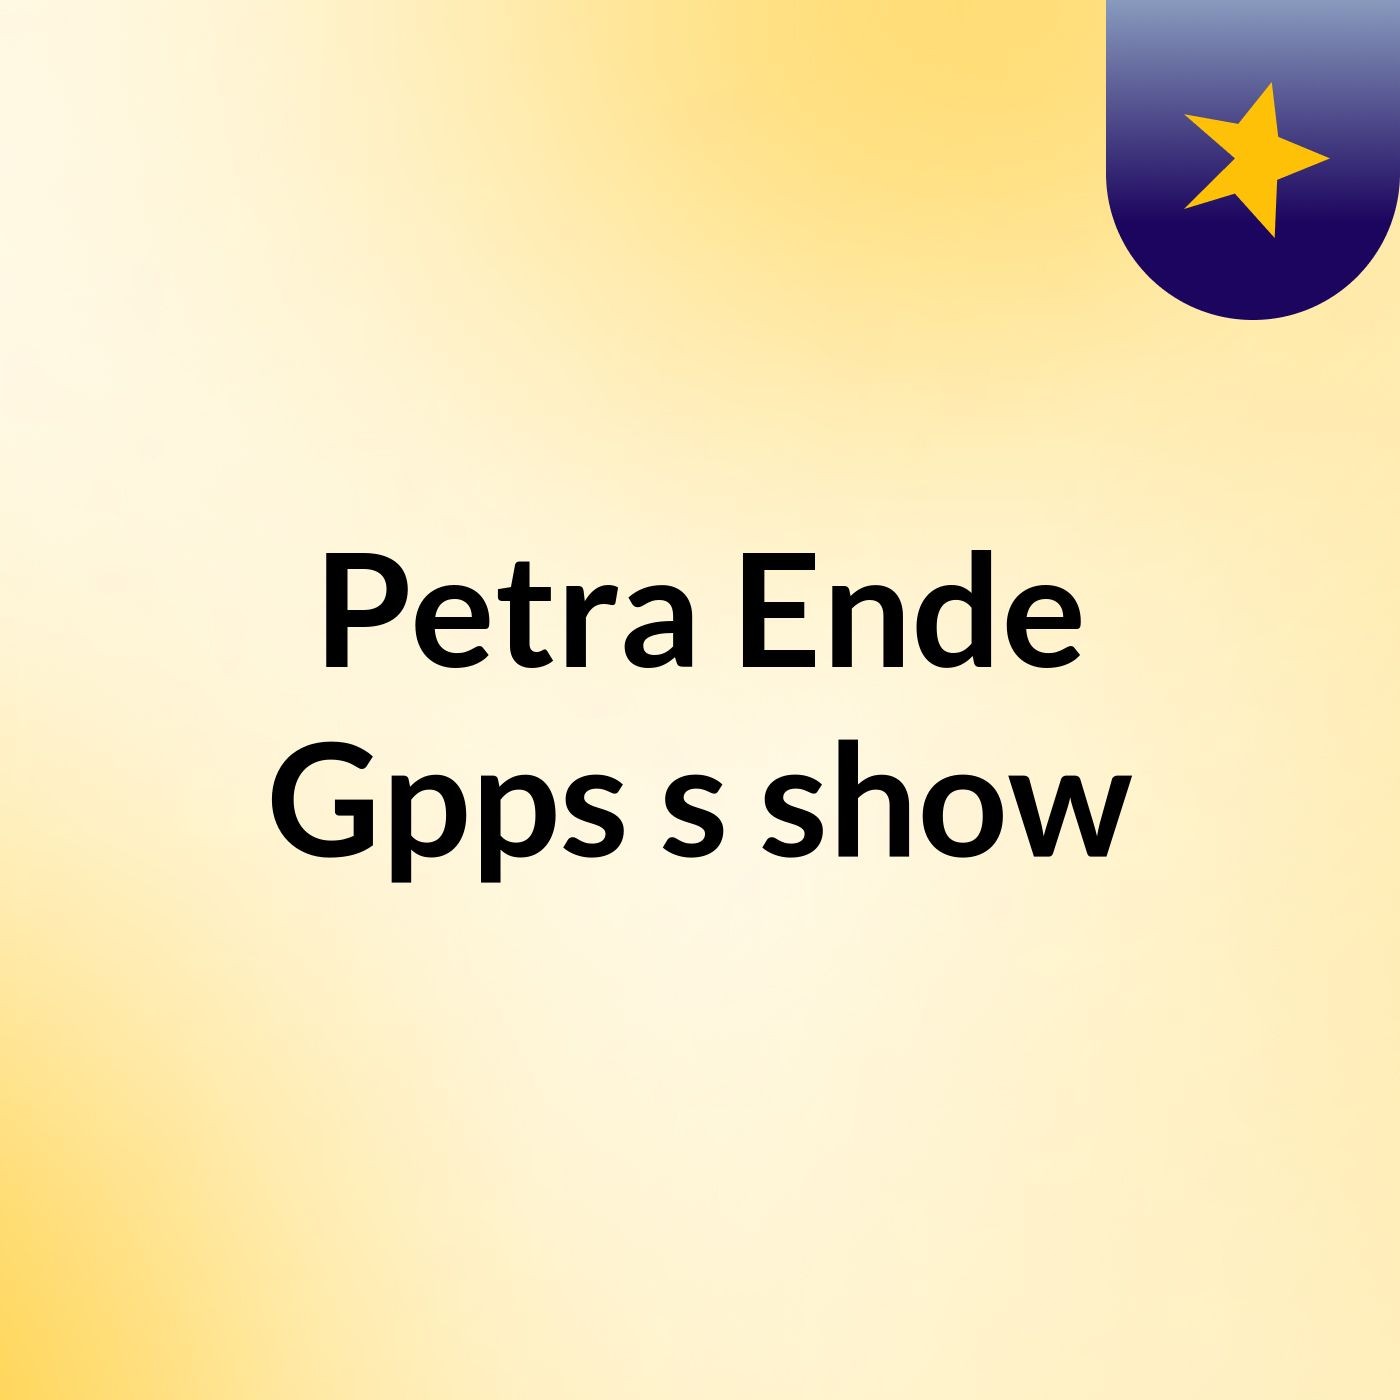 Petra Ende Gpps's show